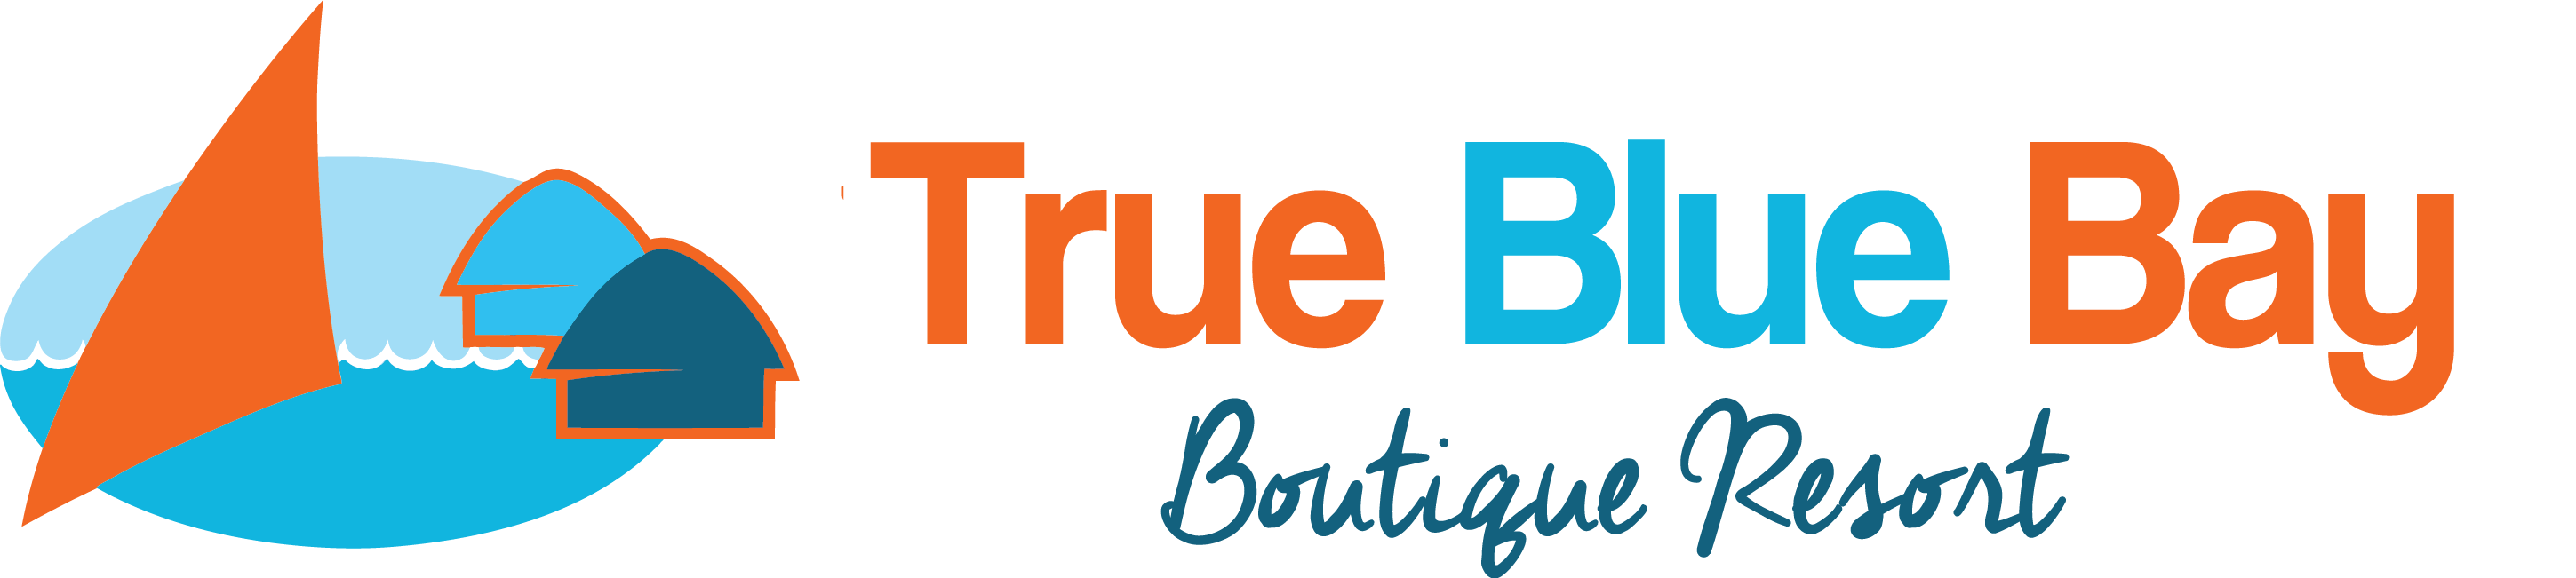 True Blue Logo - Grenada Boutique Resort - True Blue Bay Boutique Resort